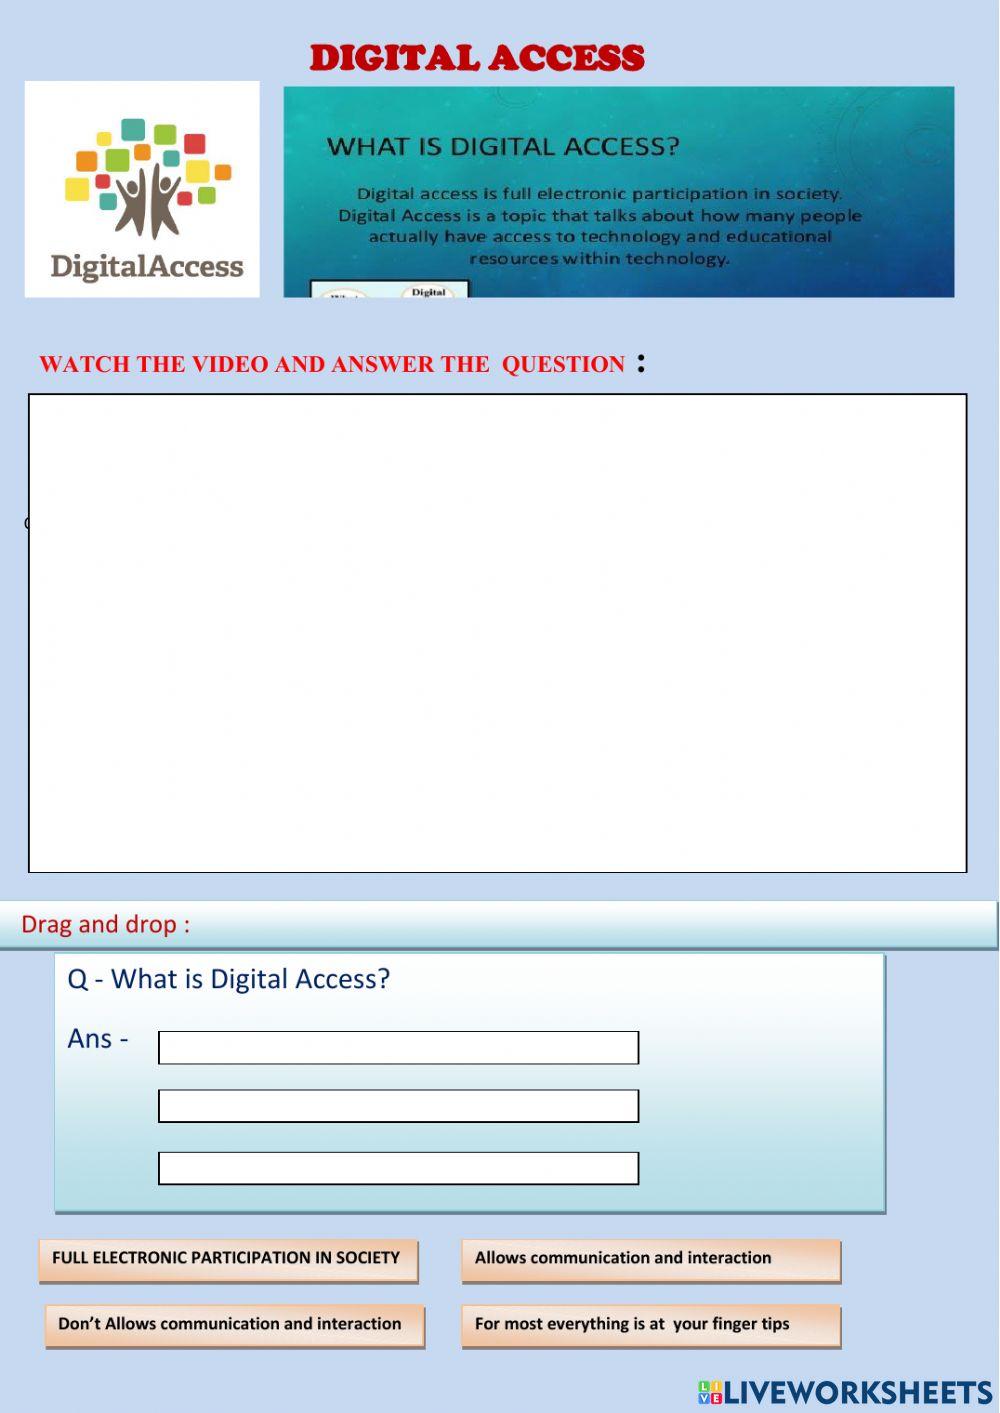 Digital access